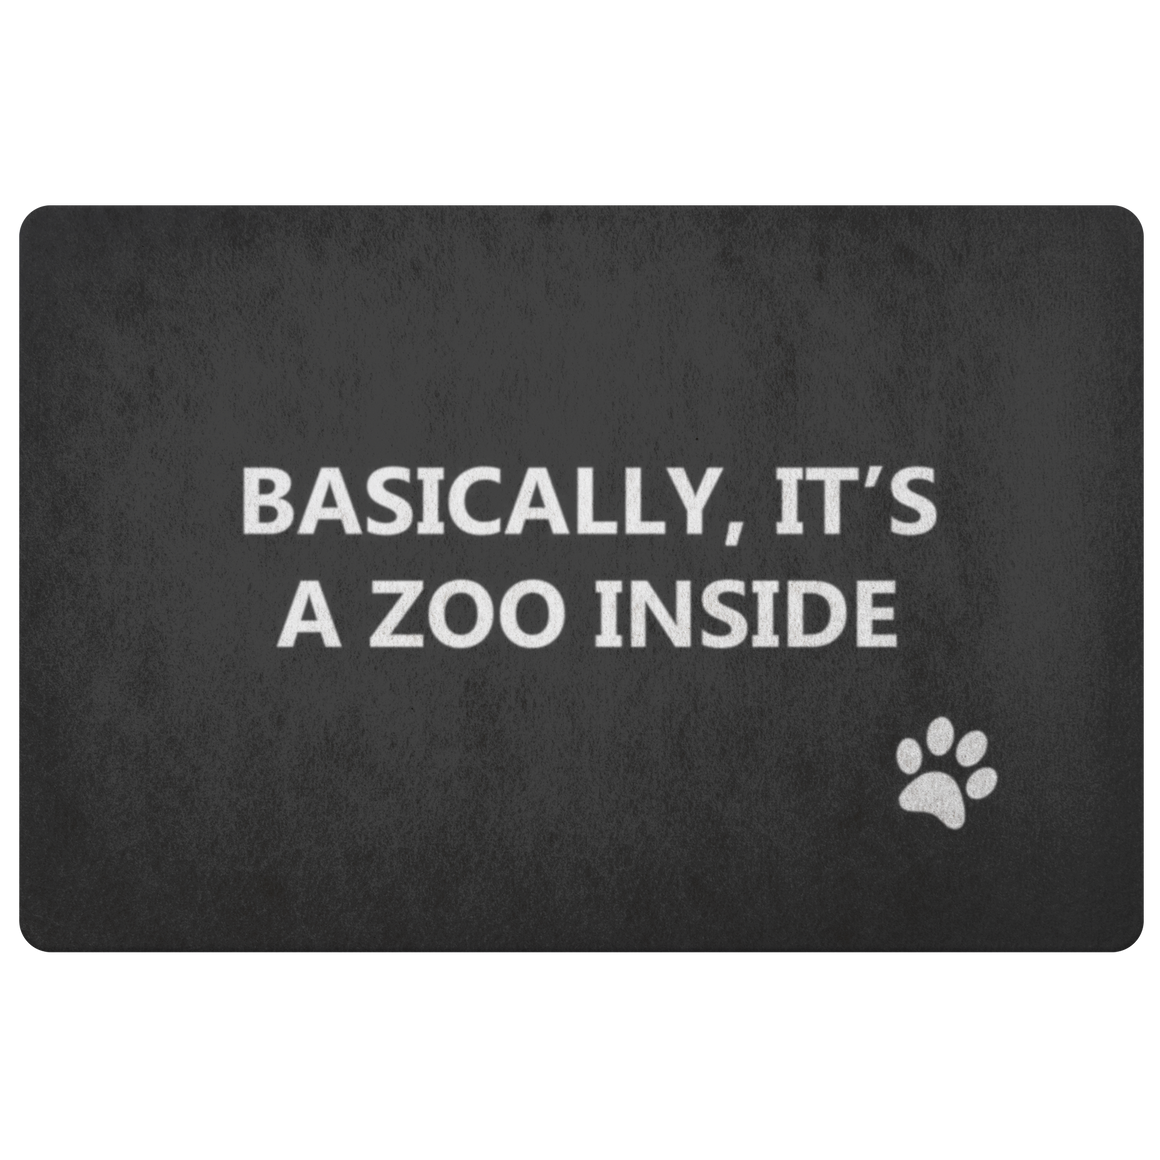 Basically it's a zoo inside - doormat